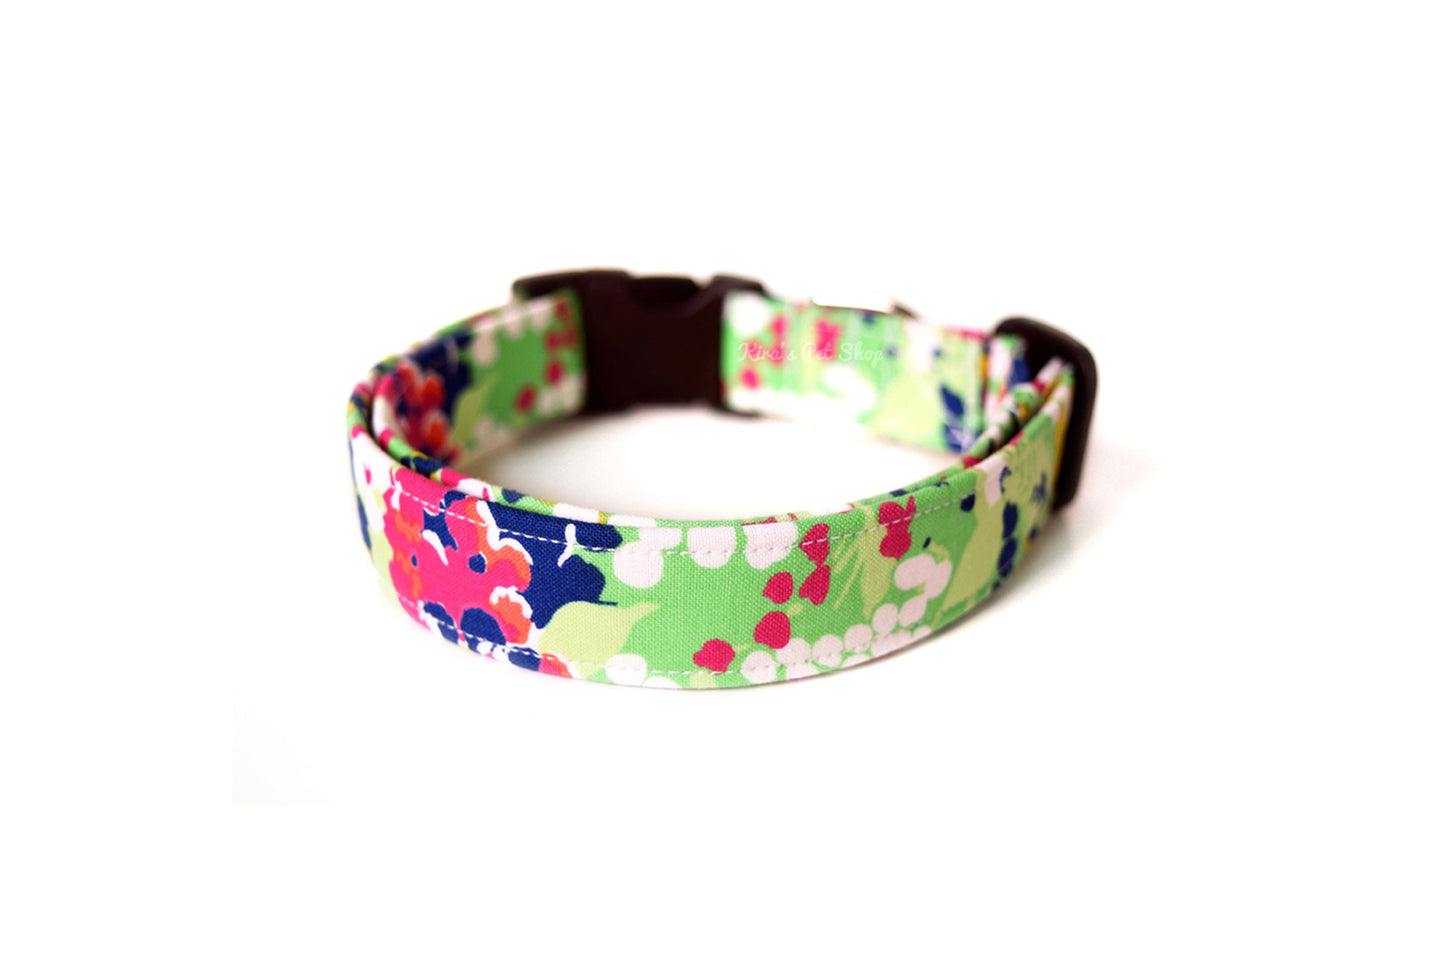 Mottled Green, Magenta Pink, Navy Blue & White Floral Dog Collar - Handmade by Kira's Pet Shop